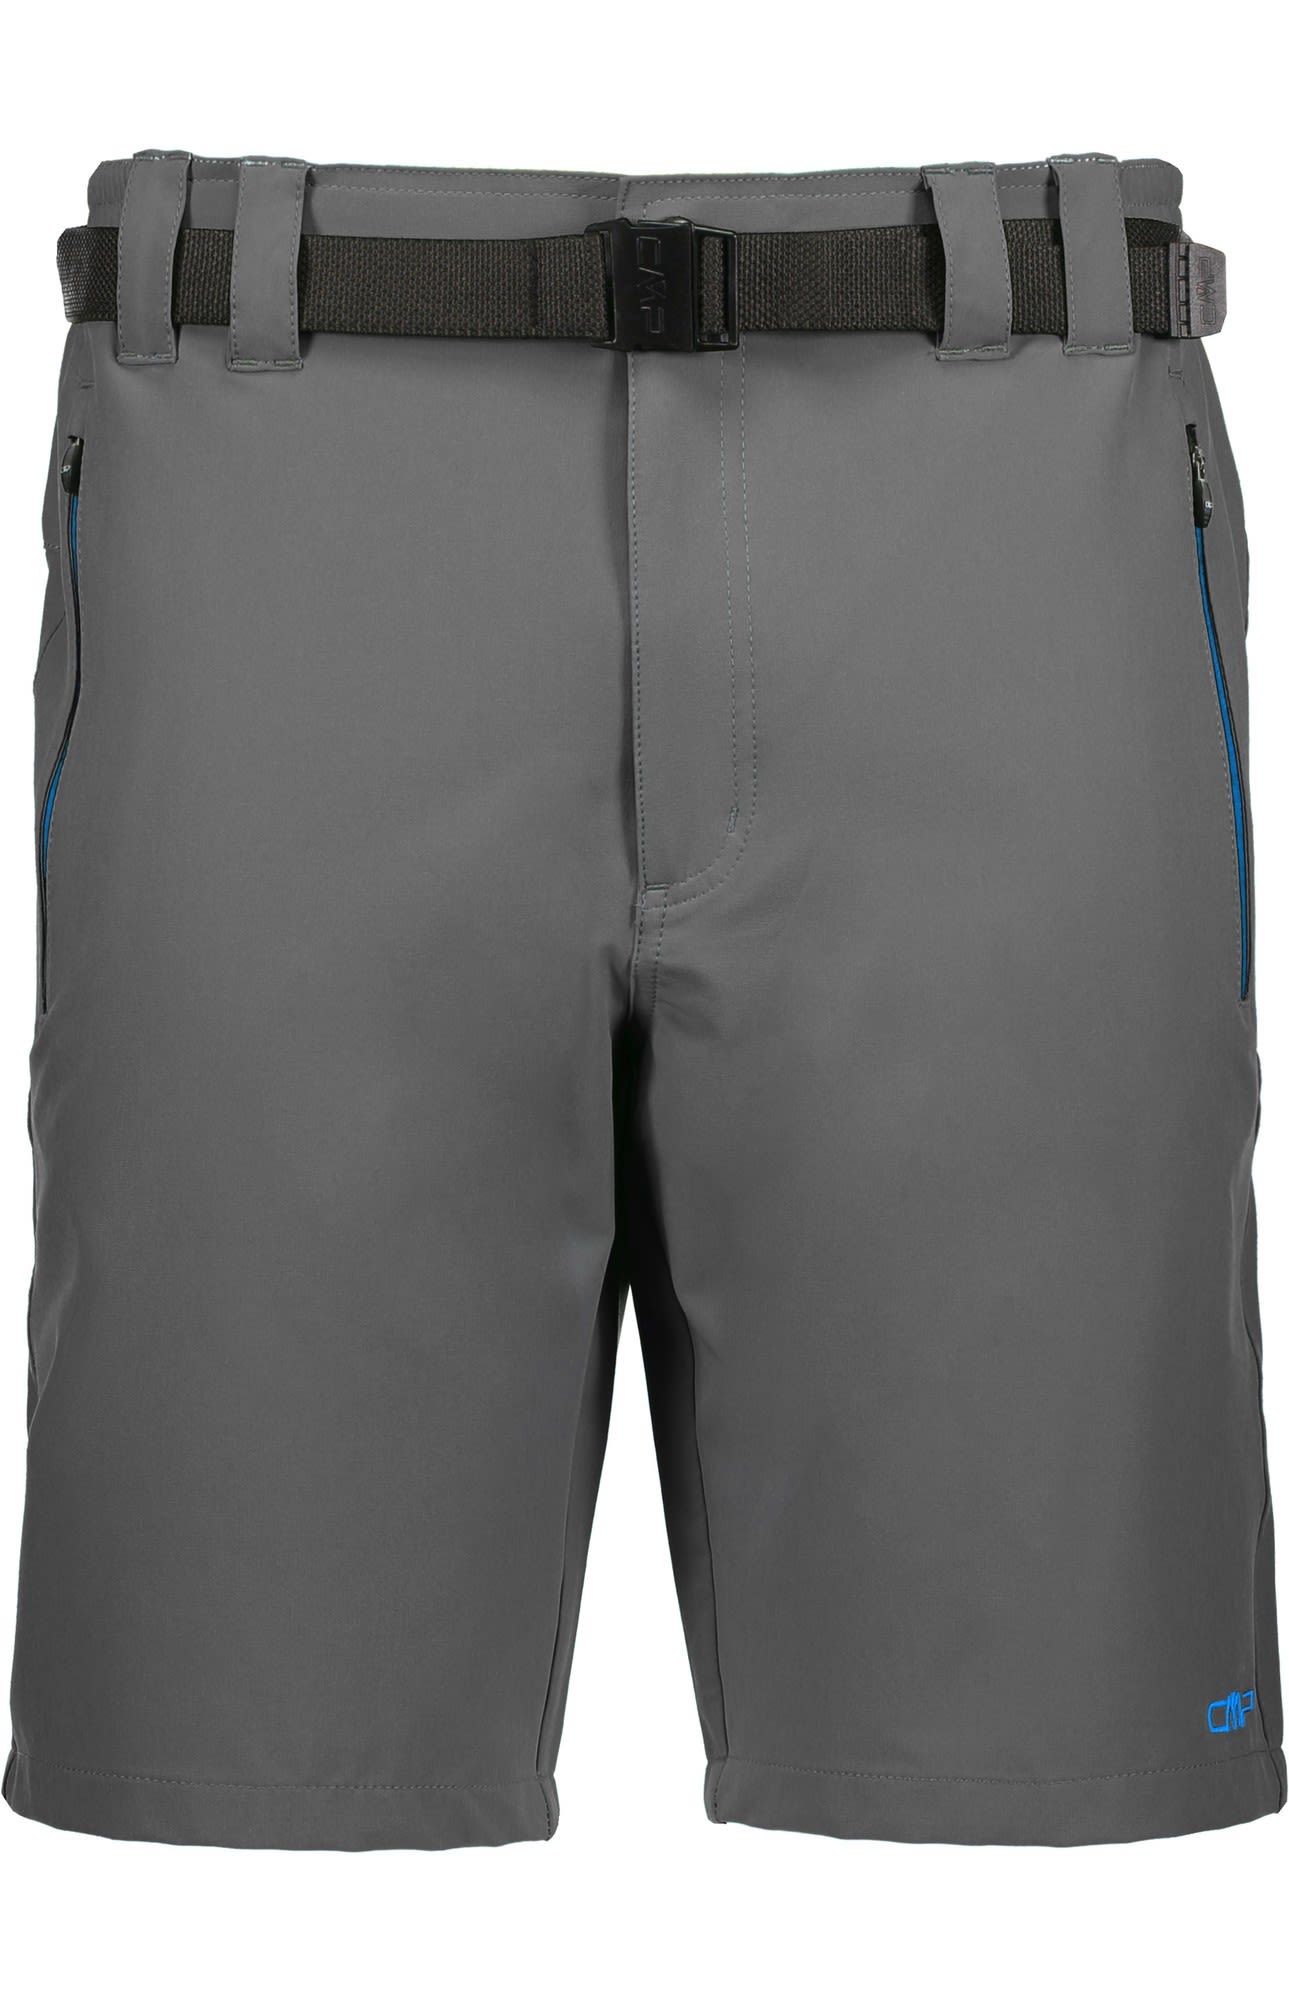 CMP Bermuda Stretch Polyester Grau- Male Shorts- Grsse 46 - Farbe Antracite unter CMP